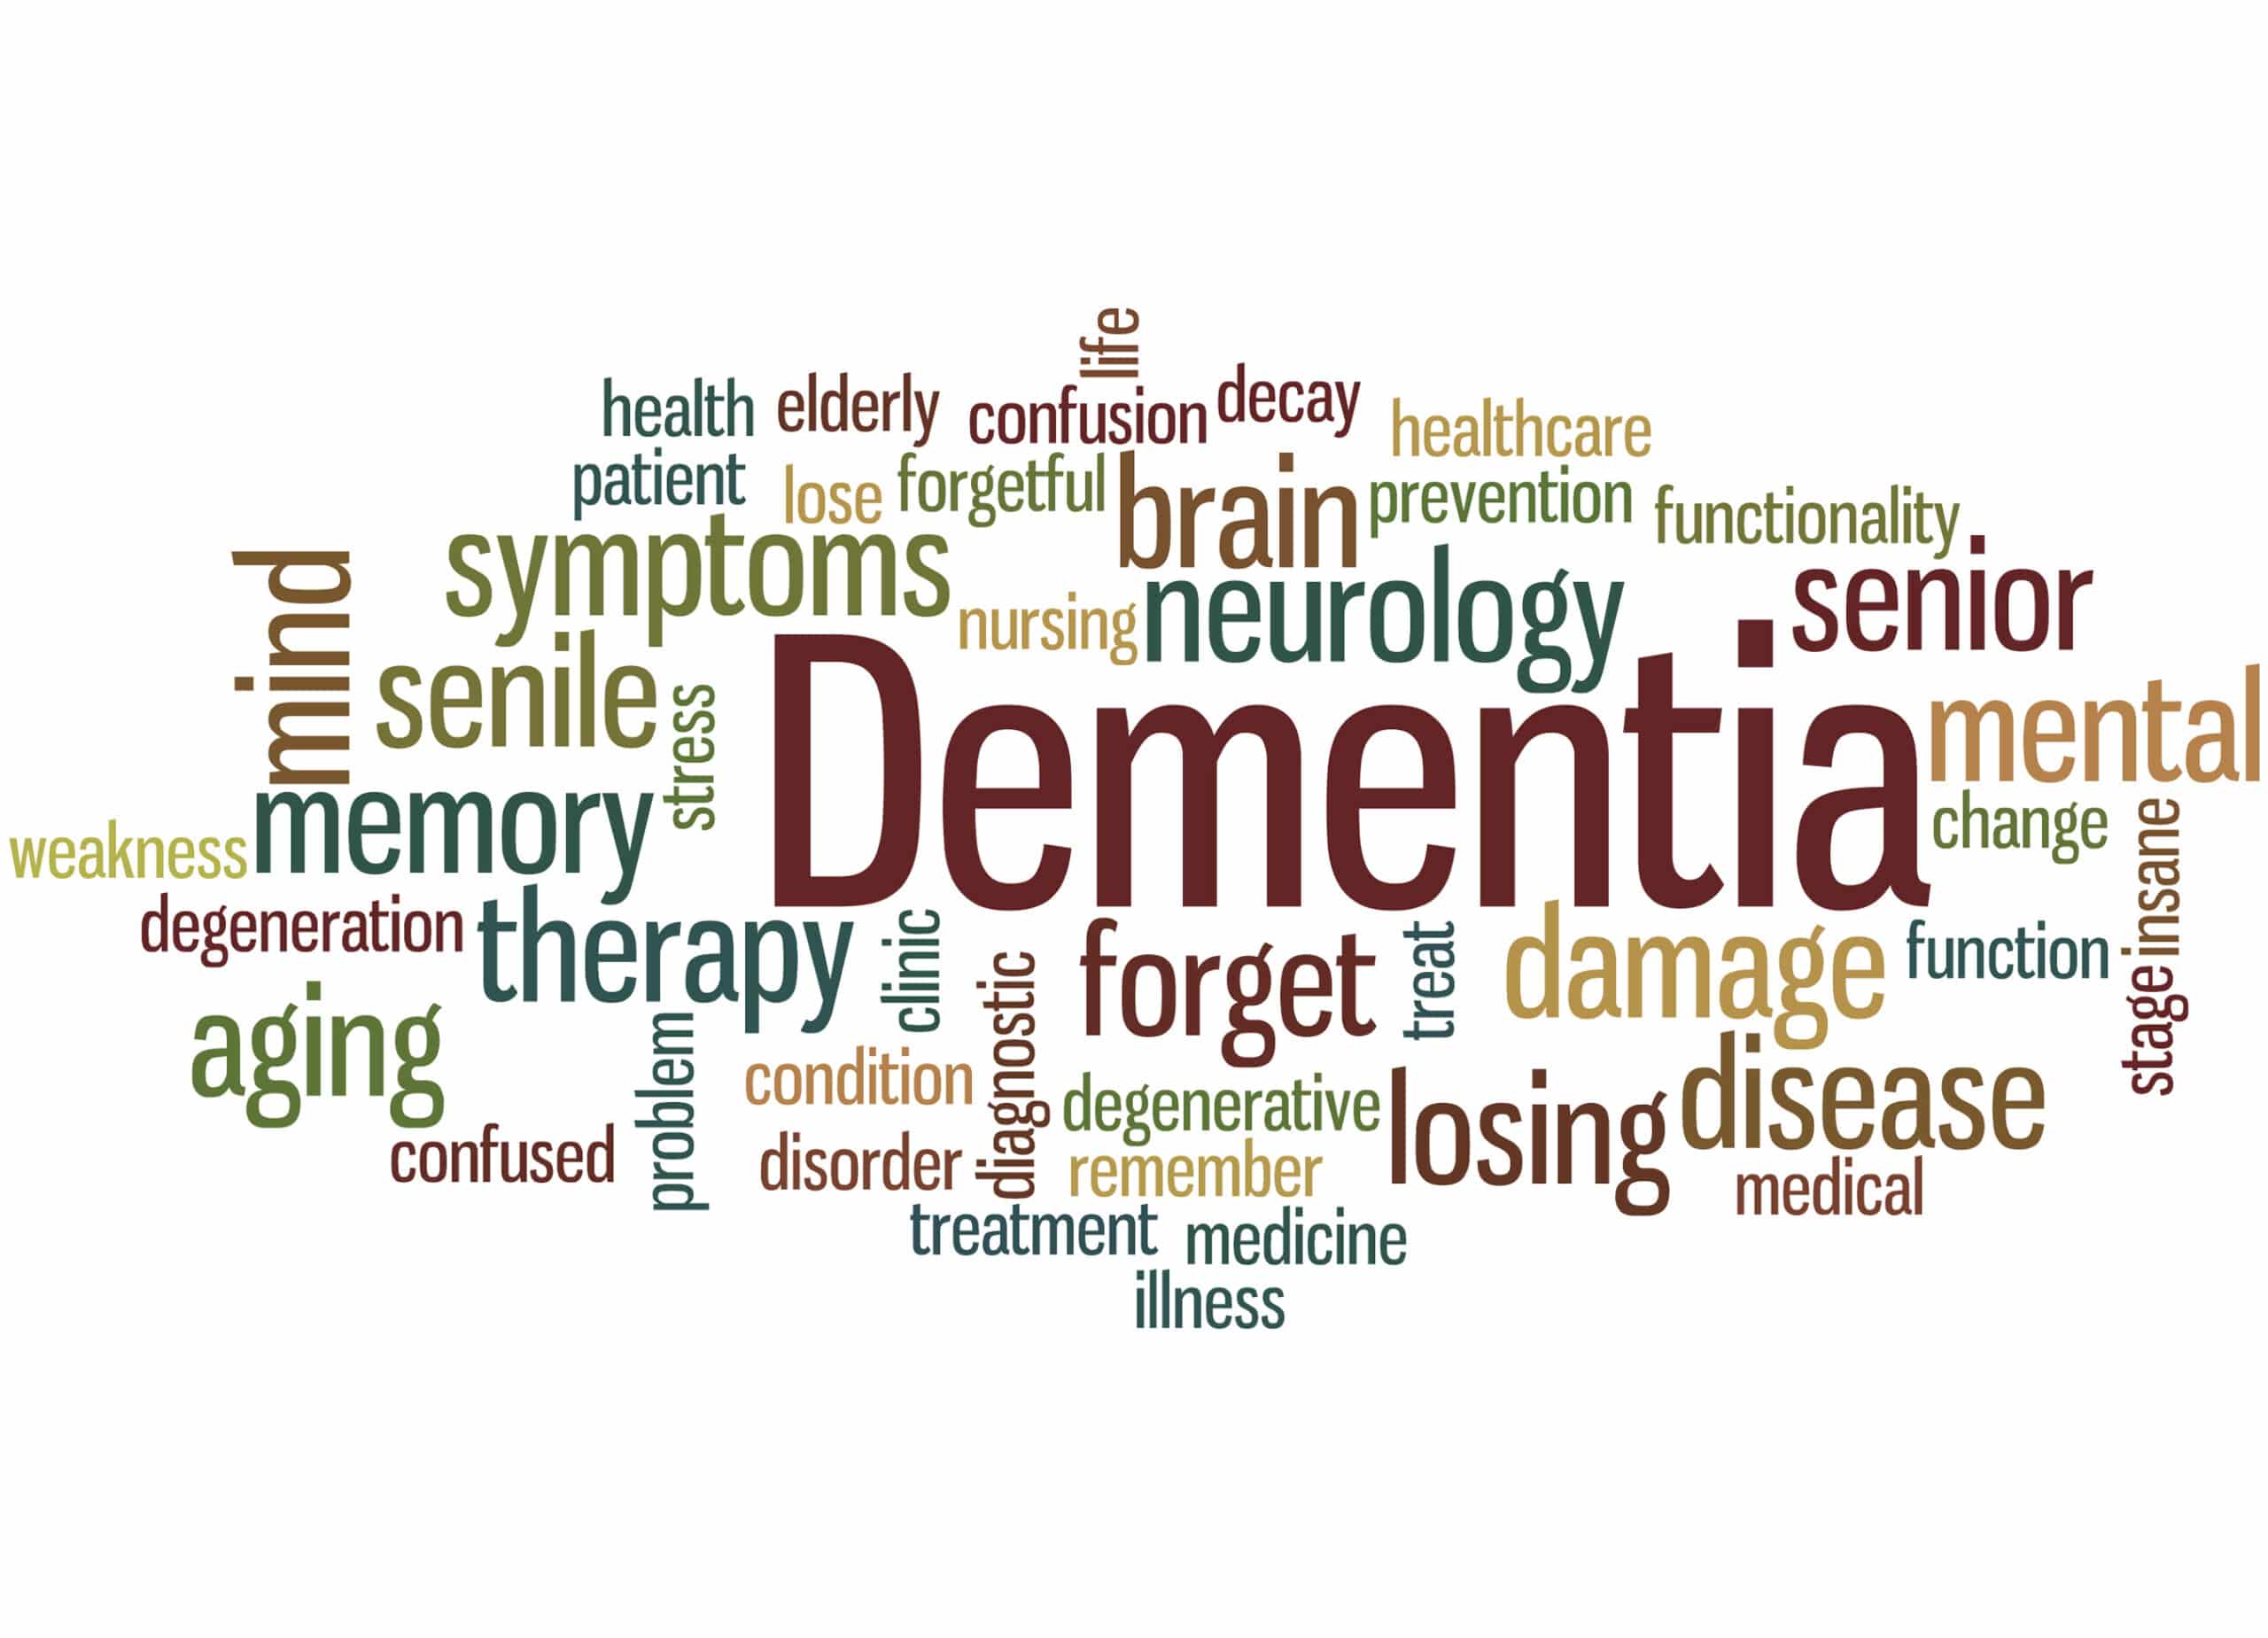 Thinning of brain region may signal dementia risk 5-10 years before symptoms